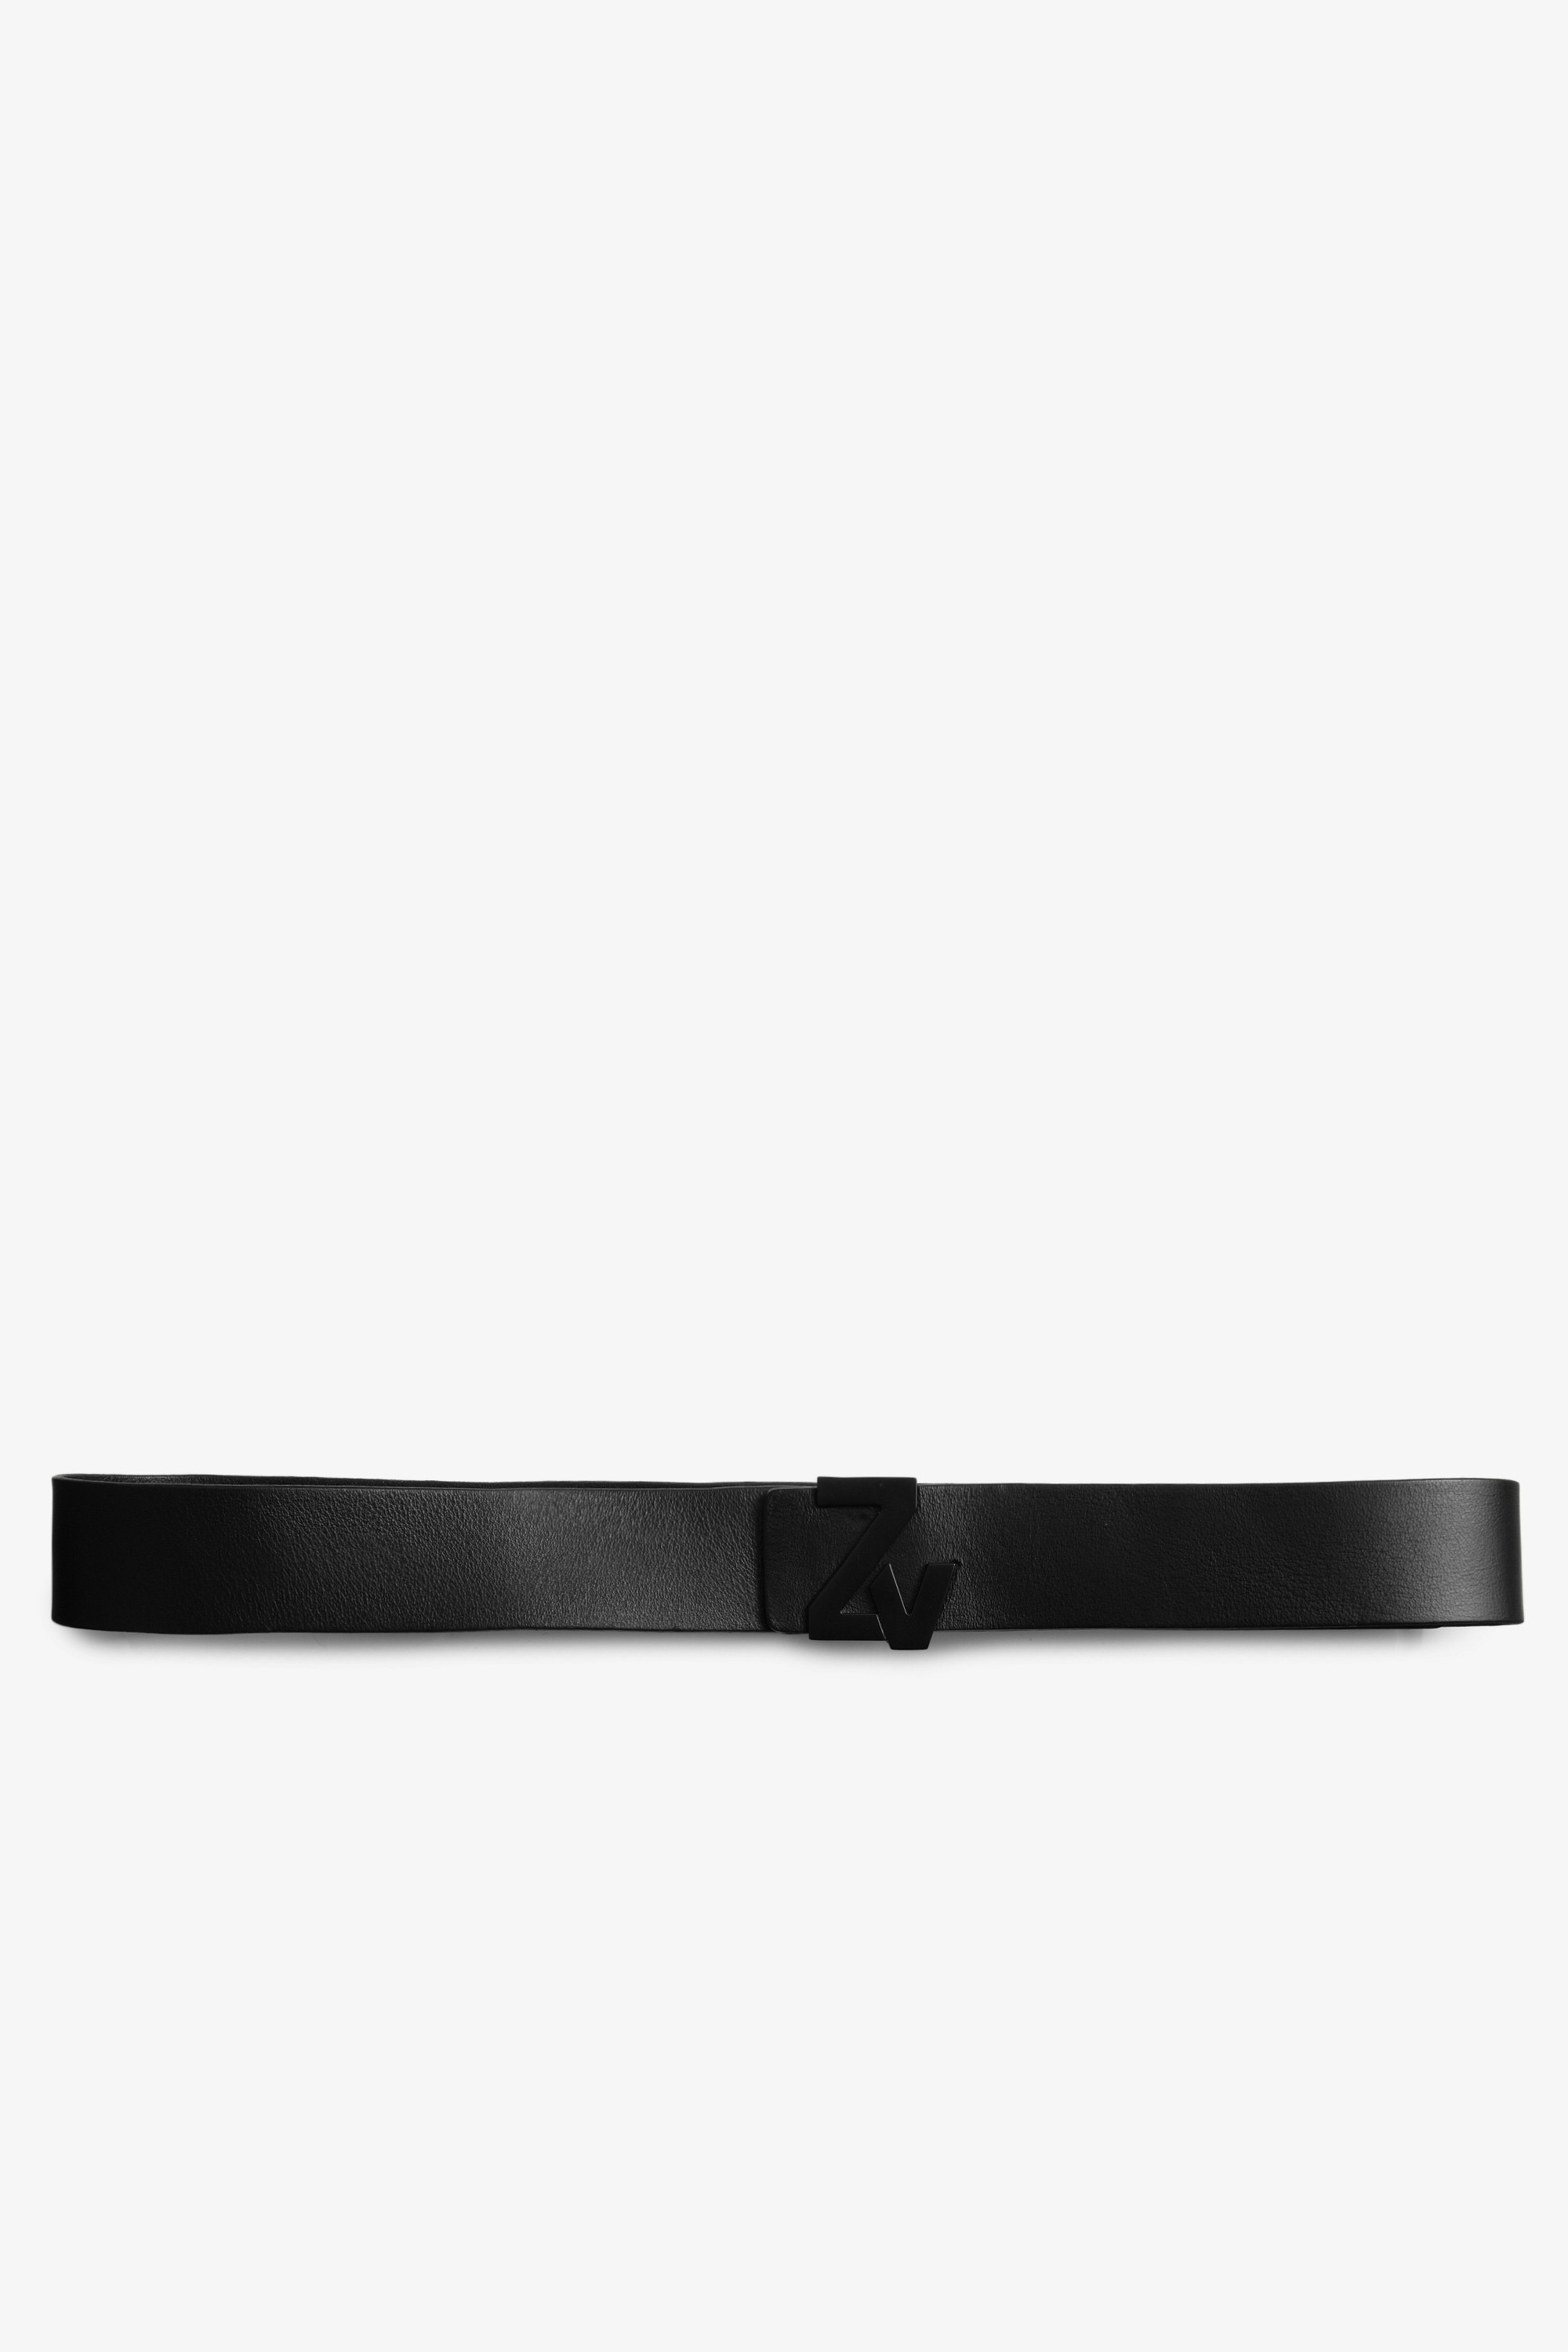 ZV Initiale La ベルト レザー - Men's black leather belt with ZV buckle